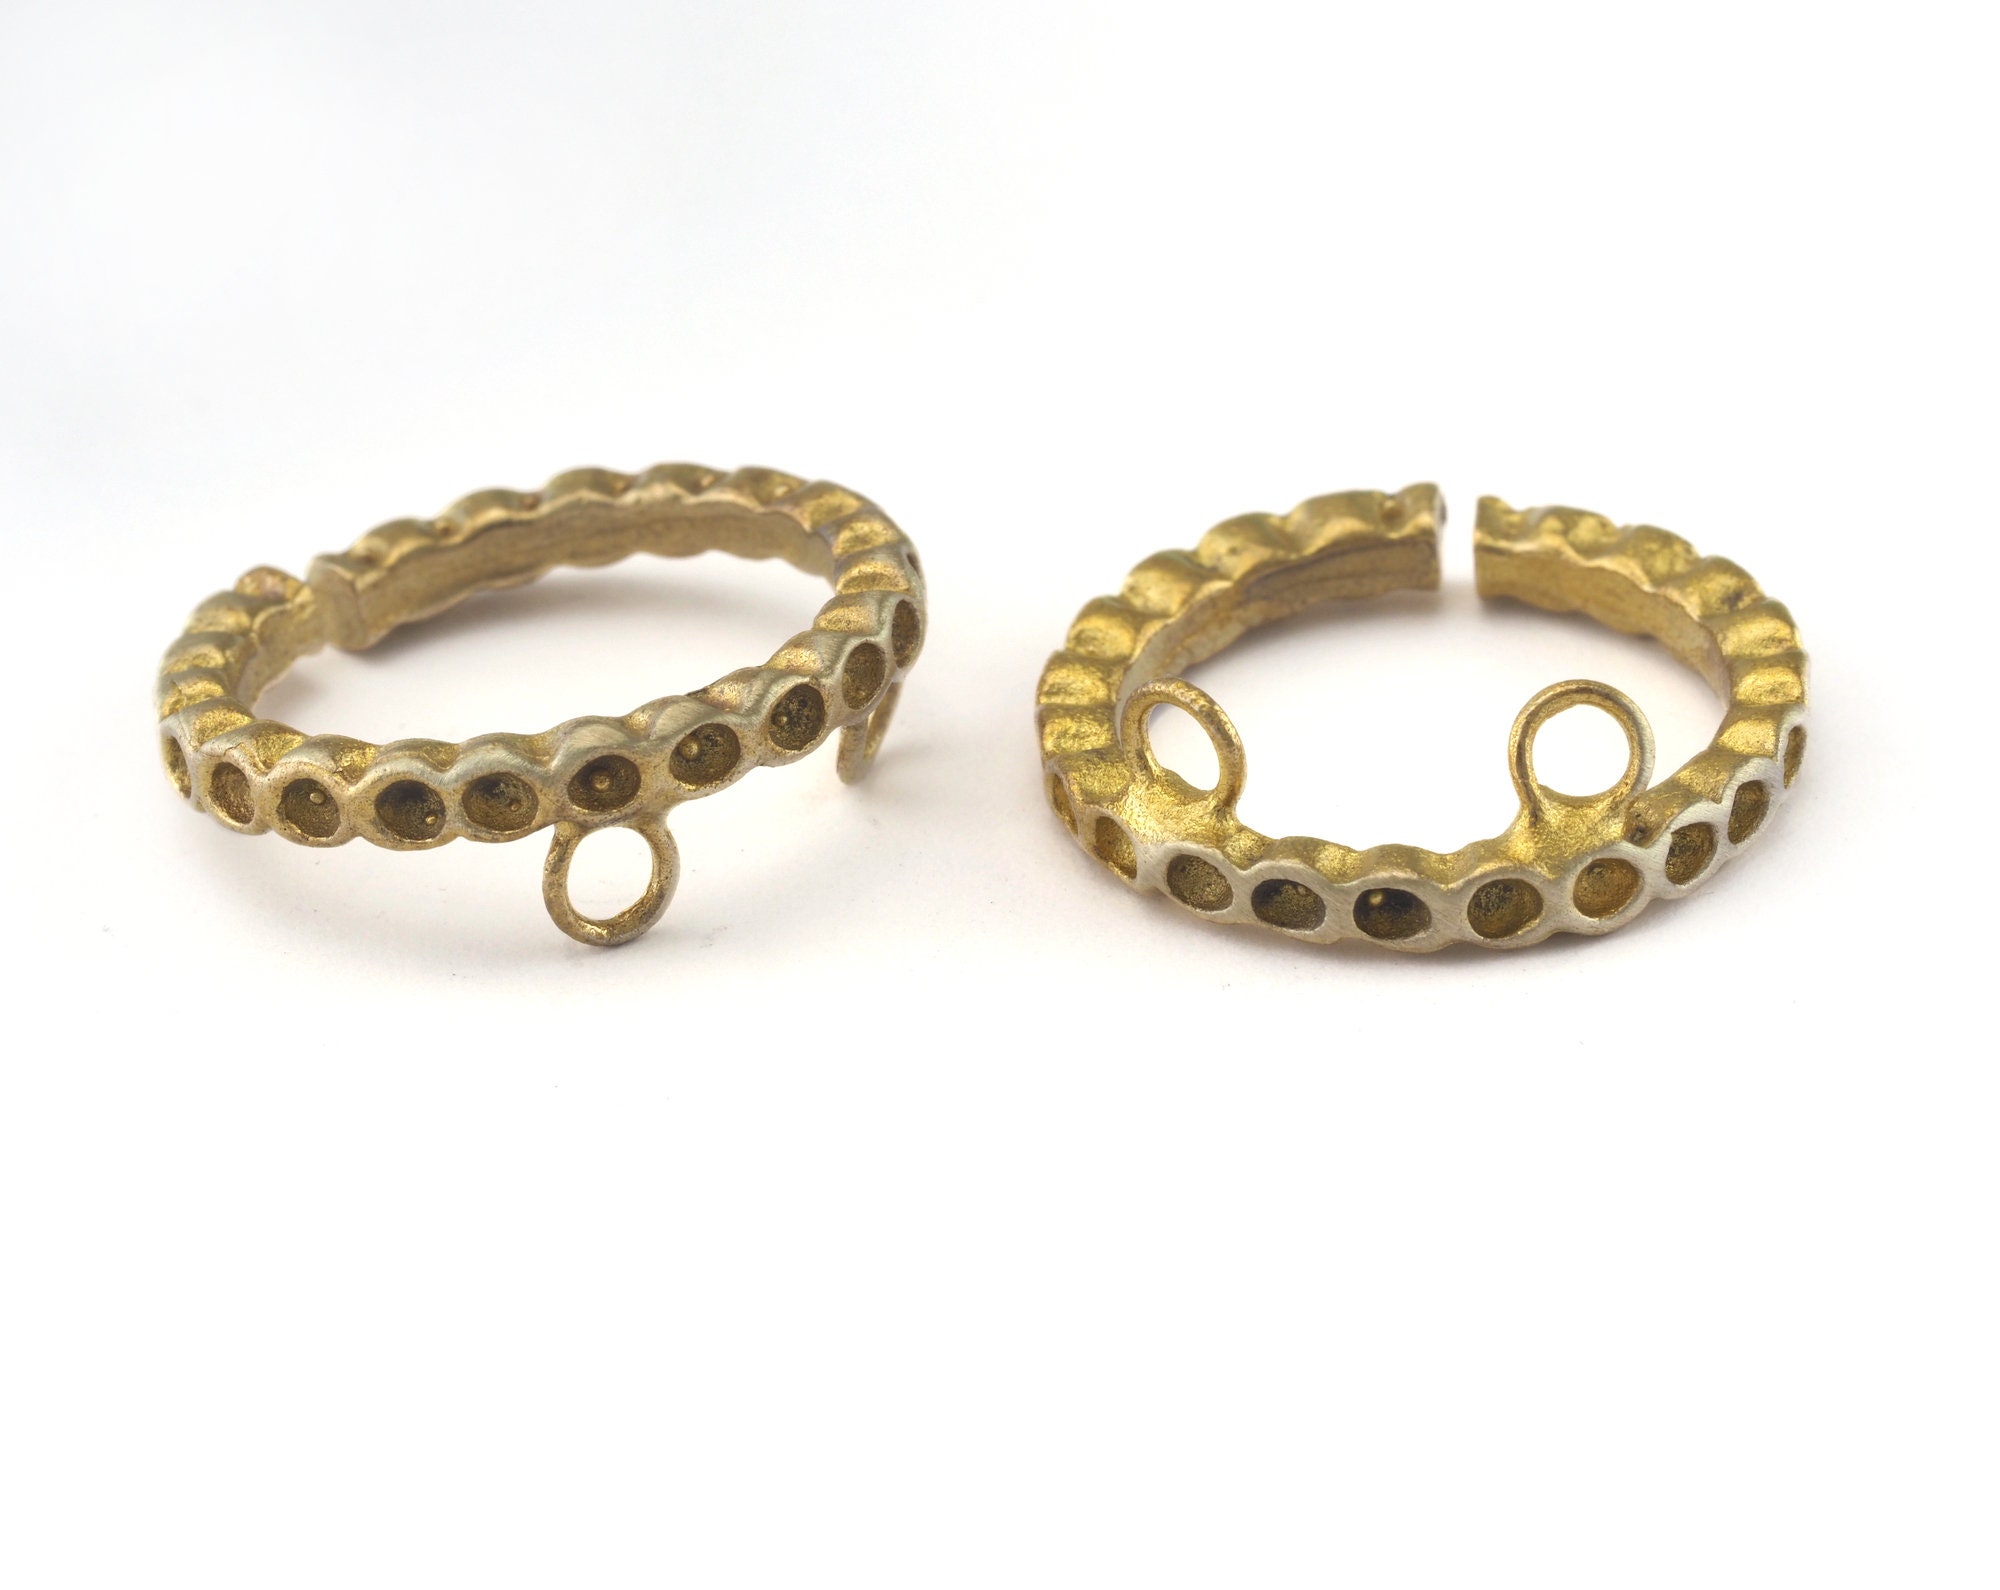 Travel Ring – Loop Jewelry